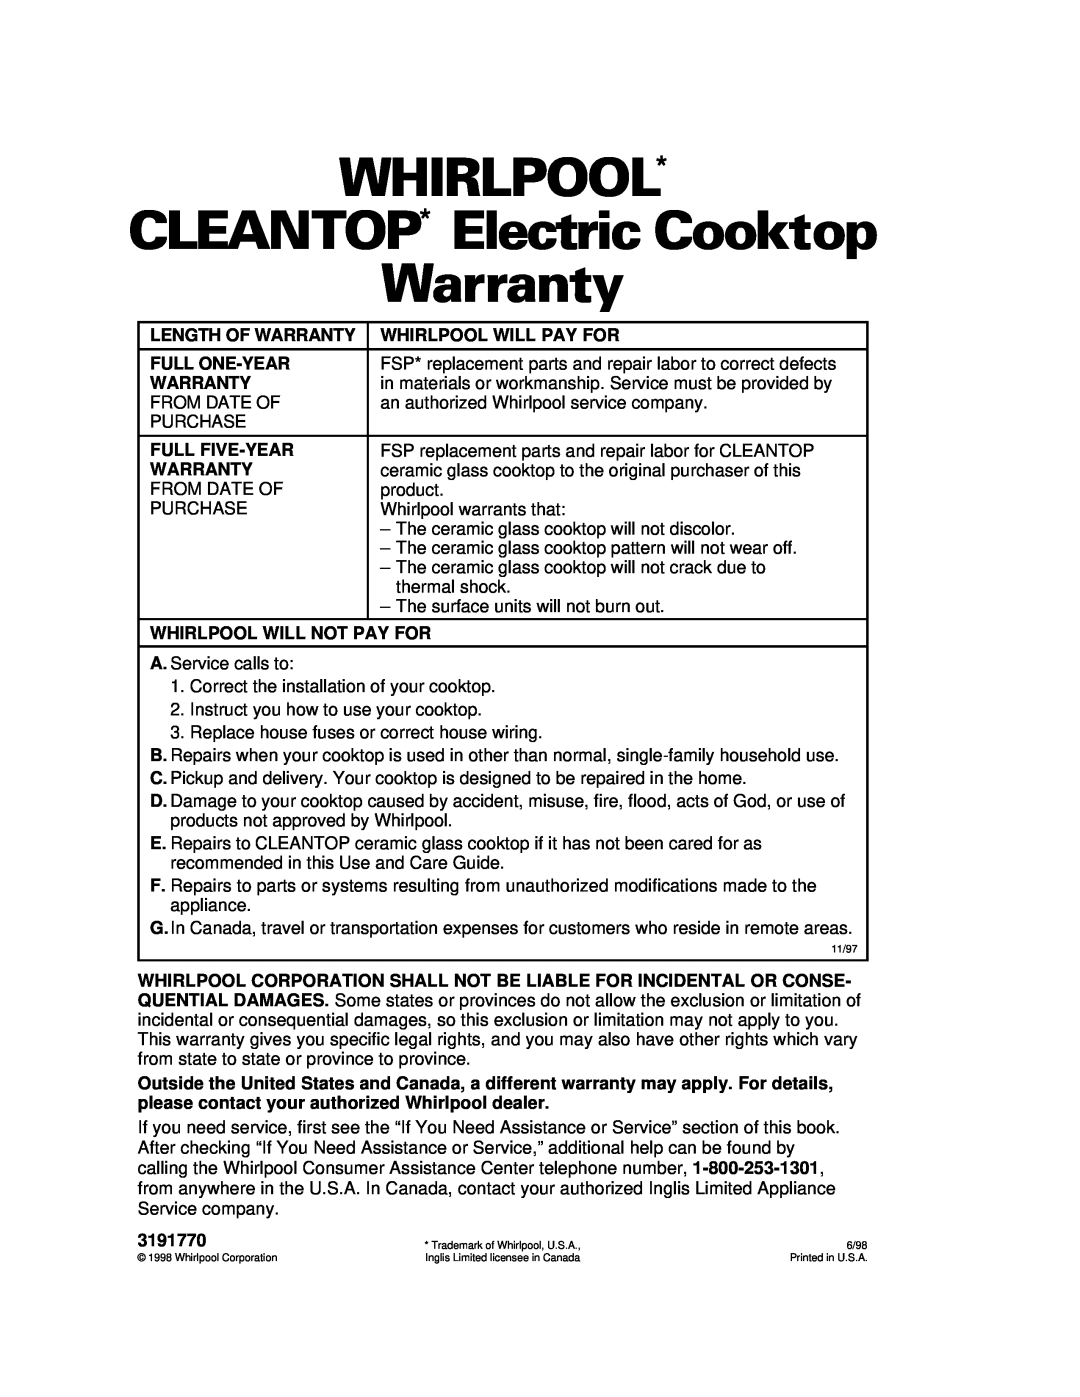 Whirlpool RCC3024G, GJC3634G WHIRLPOOL CLEANTOP* Electric Cooktop Warranty, 11/97, Trademark of Whirlpool, U.S.A, 6/98 